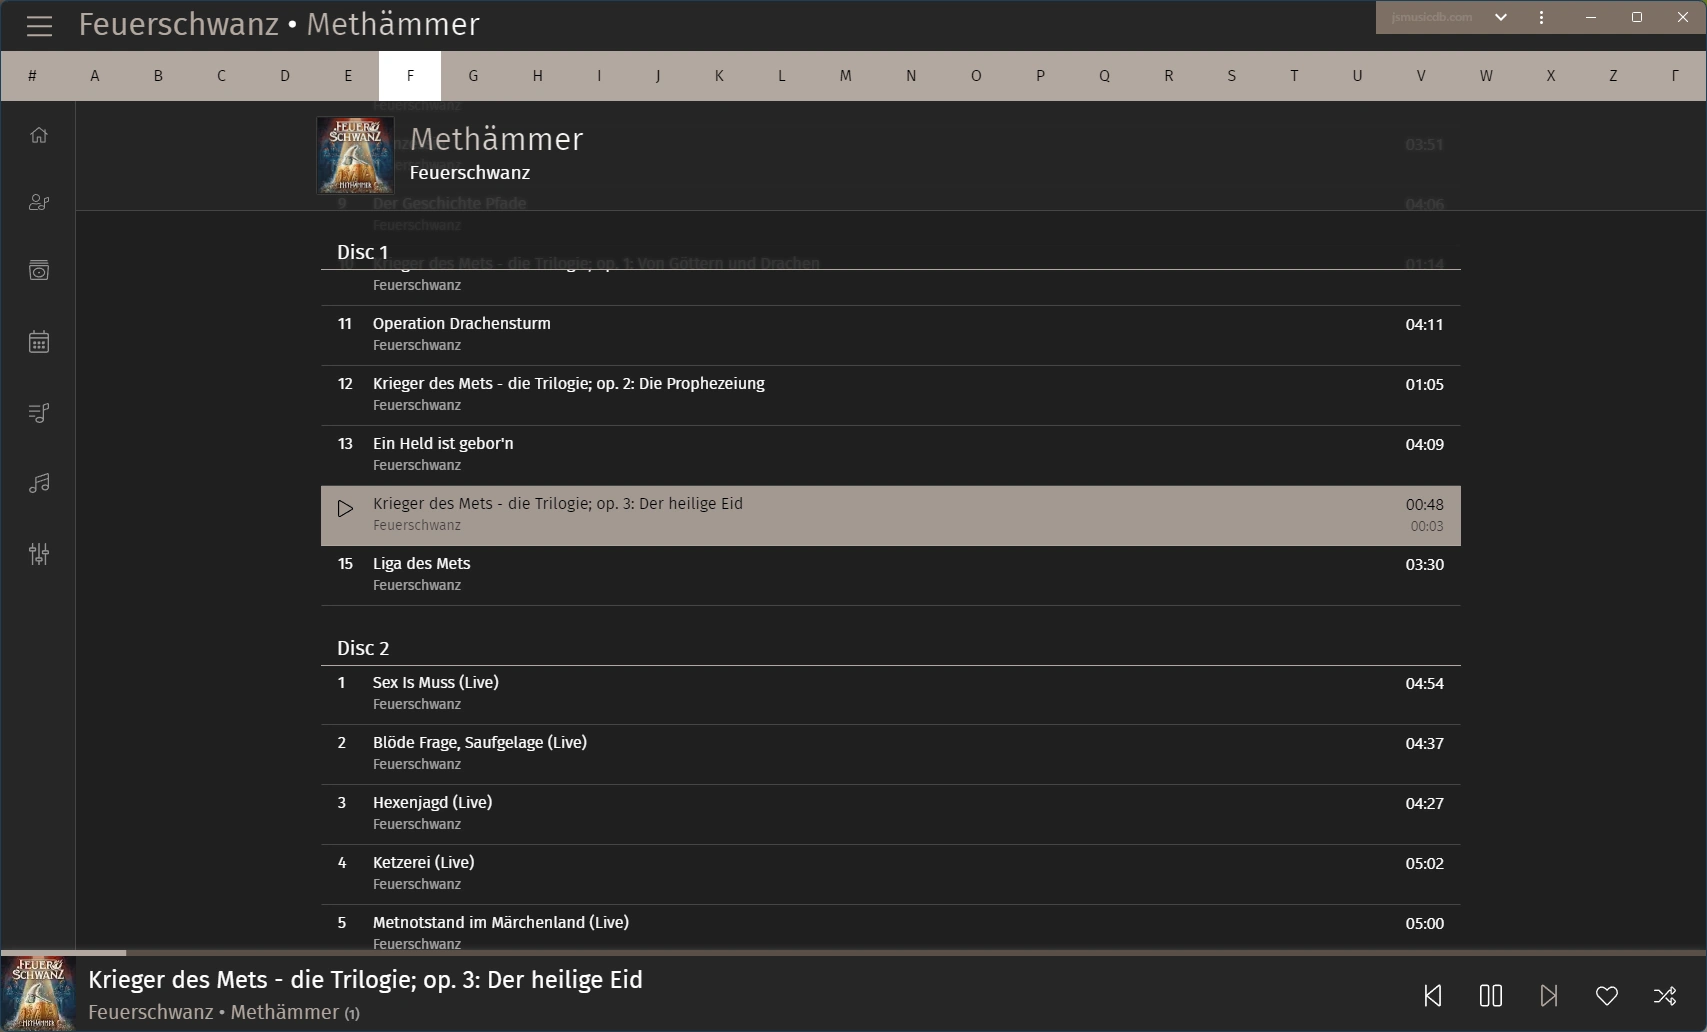 Screenshot of JSMusicDB showing Mini album details on scroll